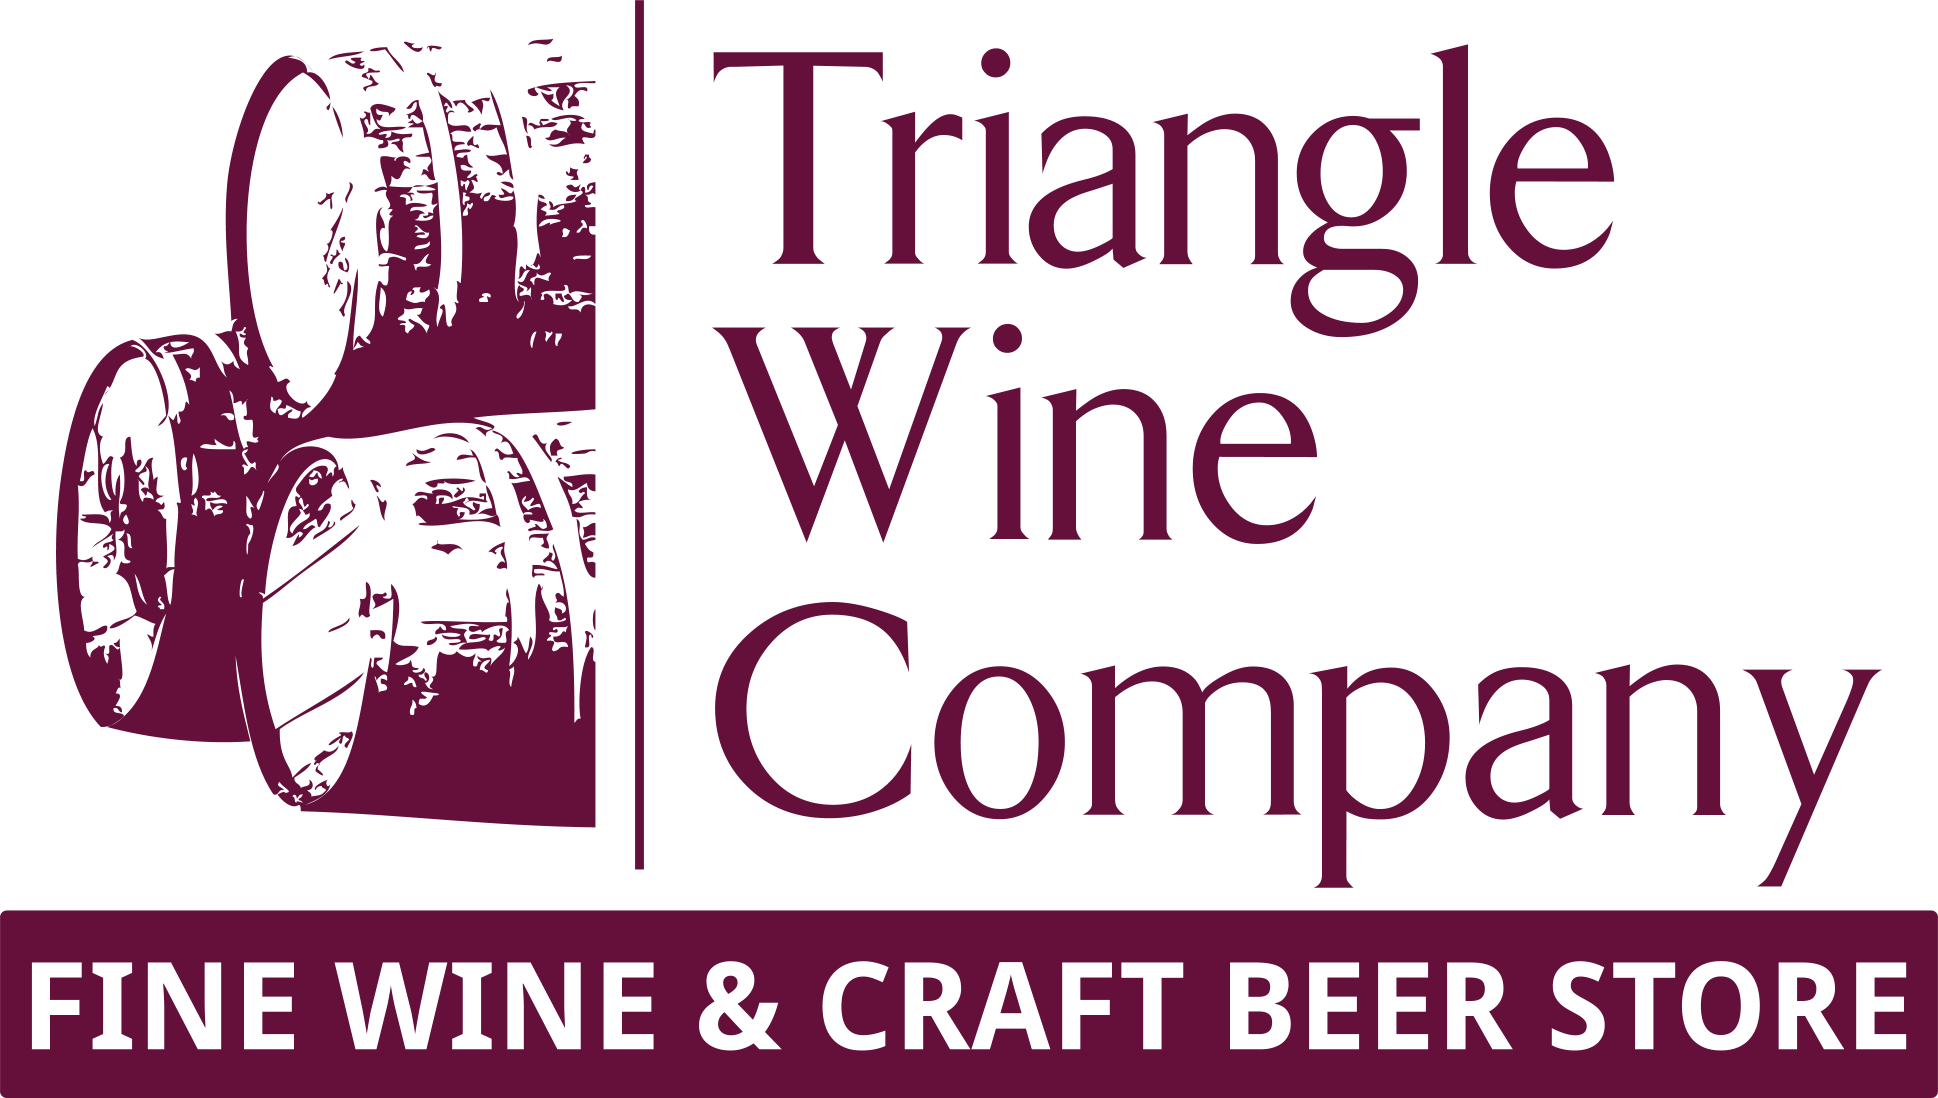 Triangle Wine Company logo